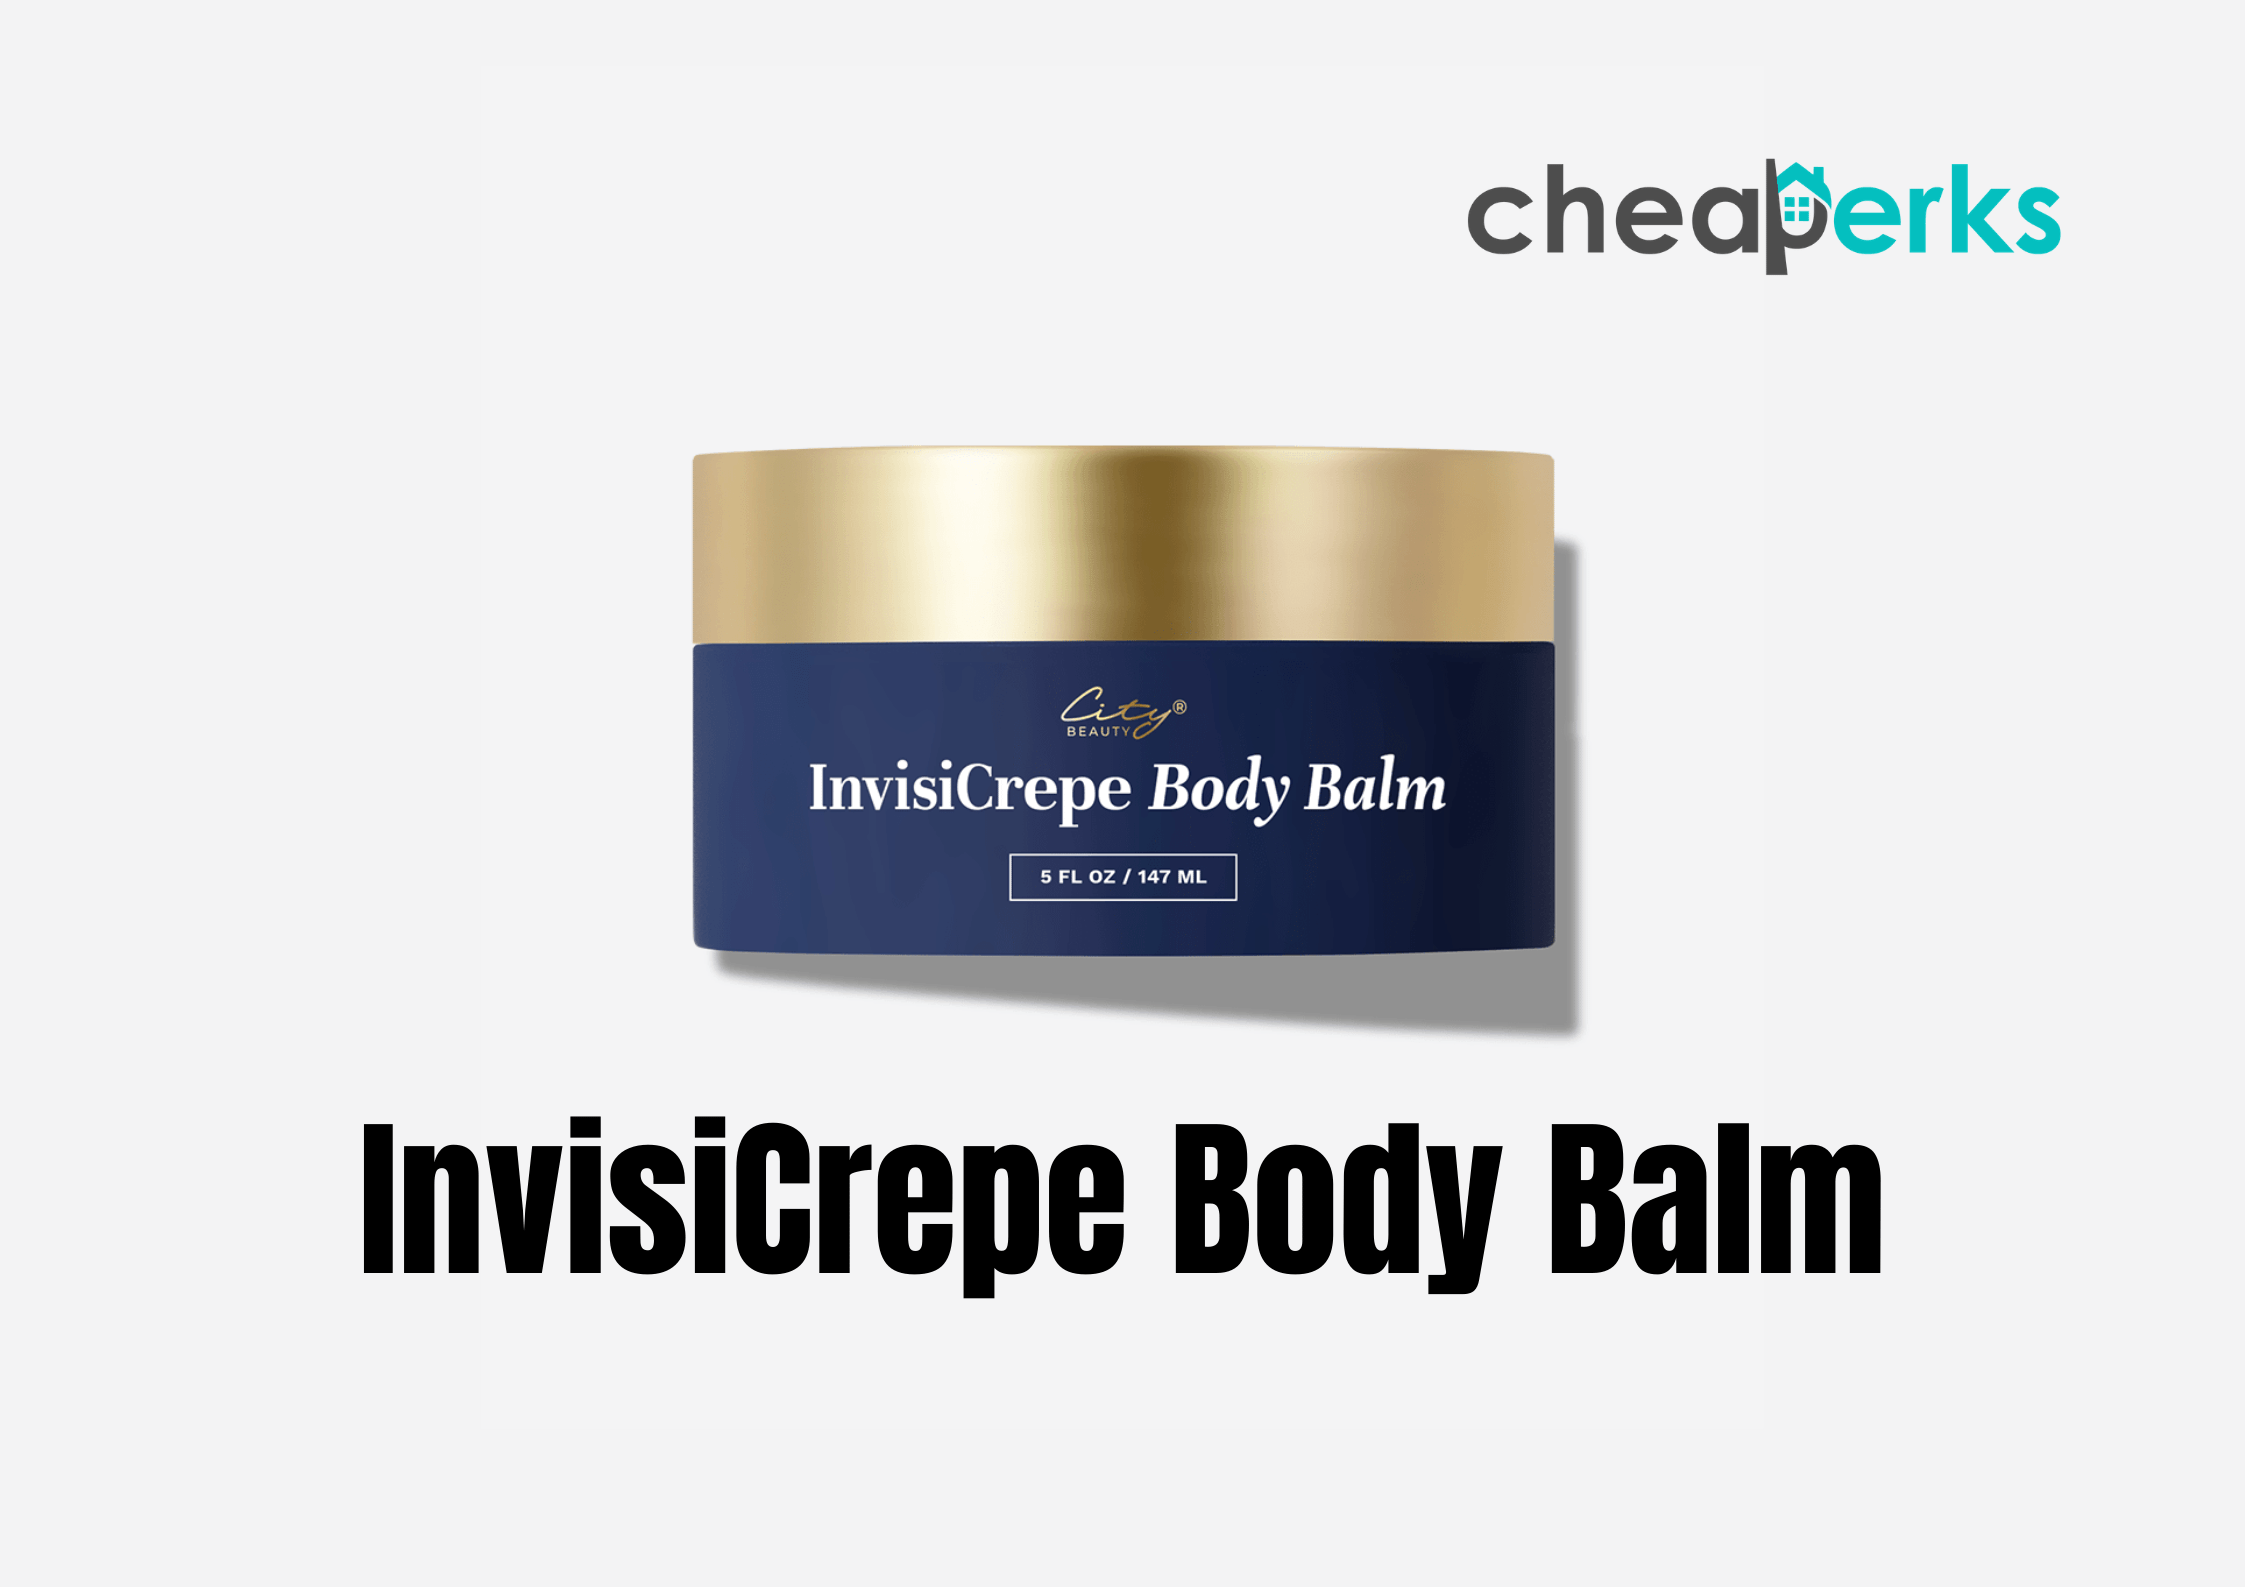 InvisiCrepe Body Balm Reviews e1613063196321 - Employing Natural Body Detoxification